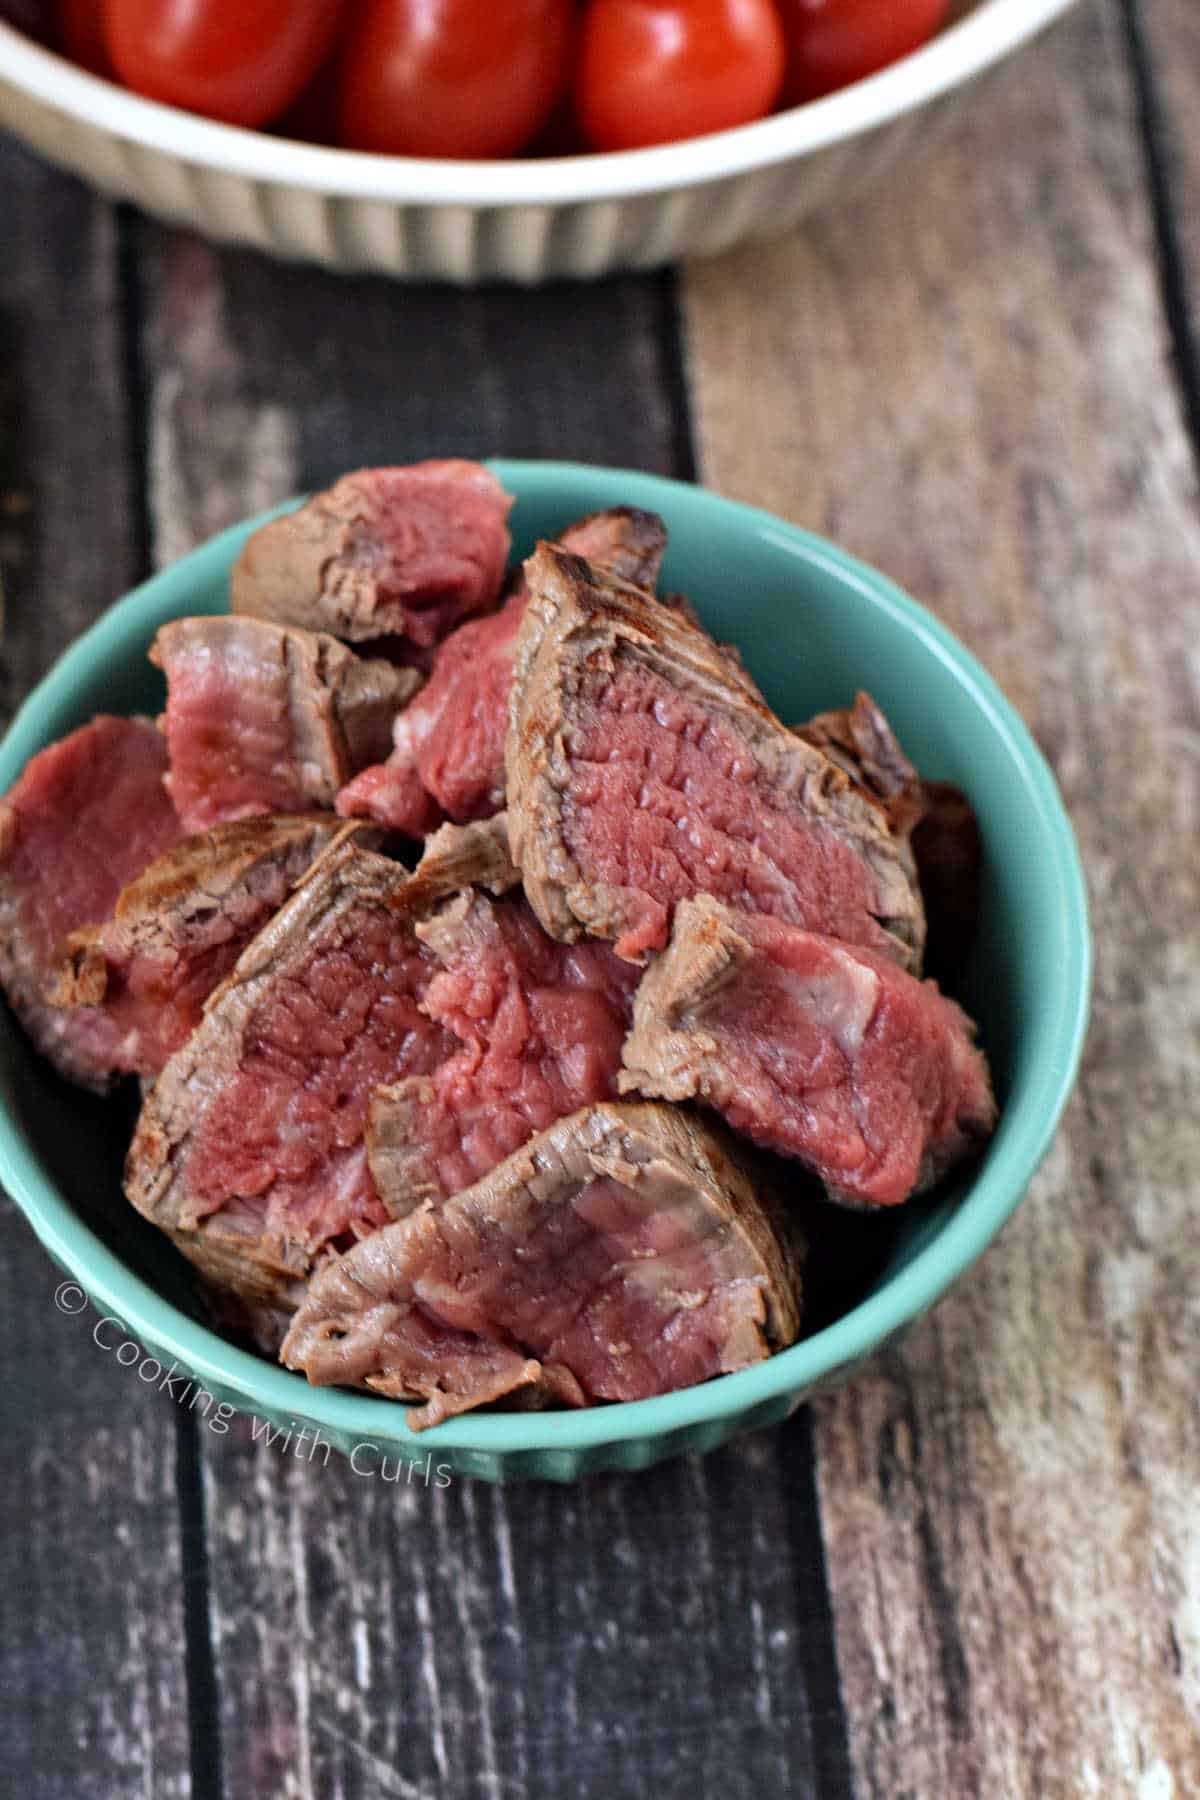 Medium-rare slices of steak in a small bowl.